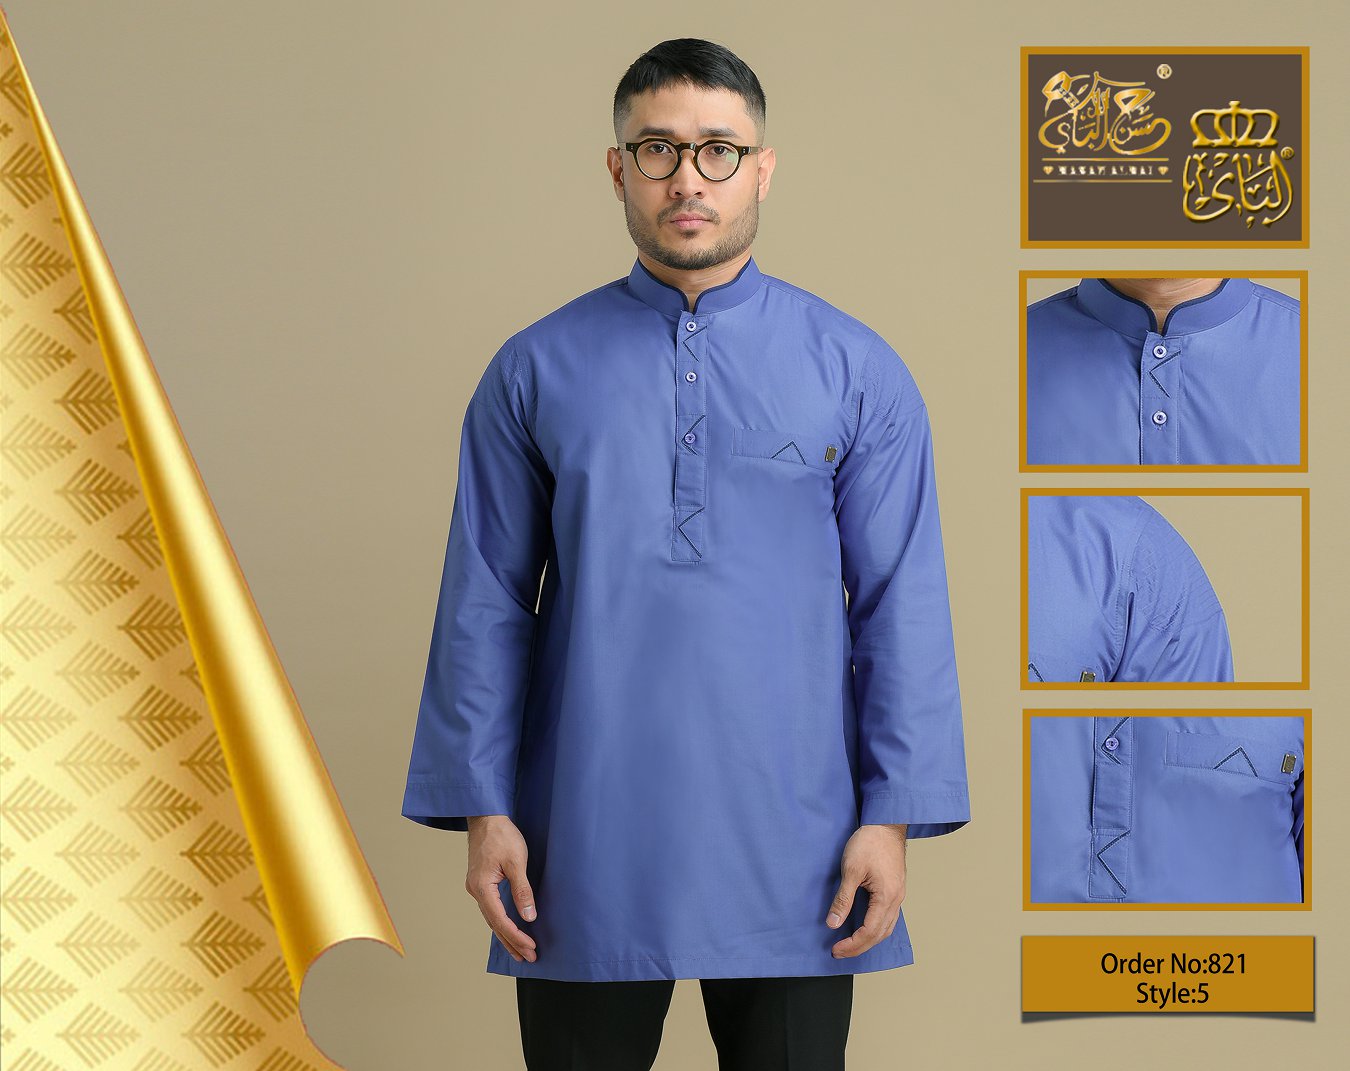 Malay clothing52